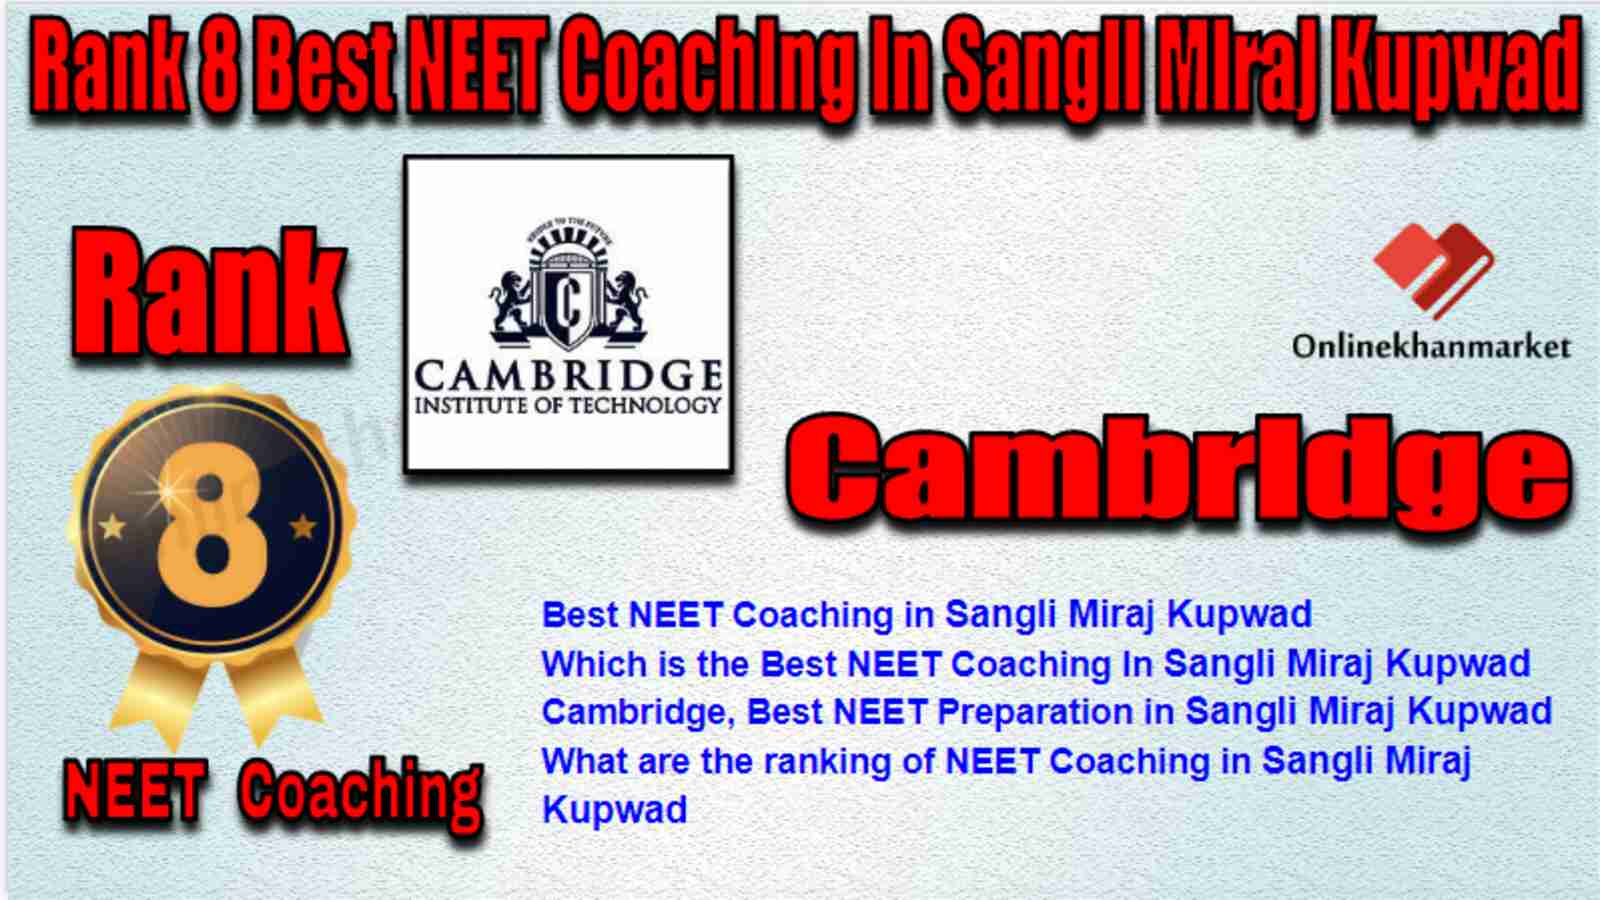 Rank 8 Best NEET Coaching in Sangli Miraj Kupwad